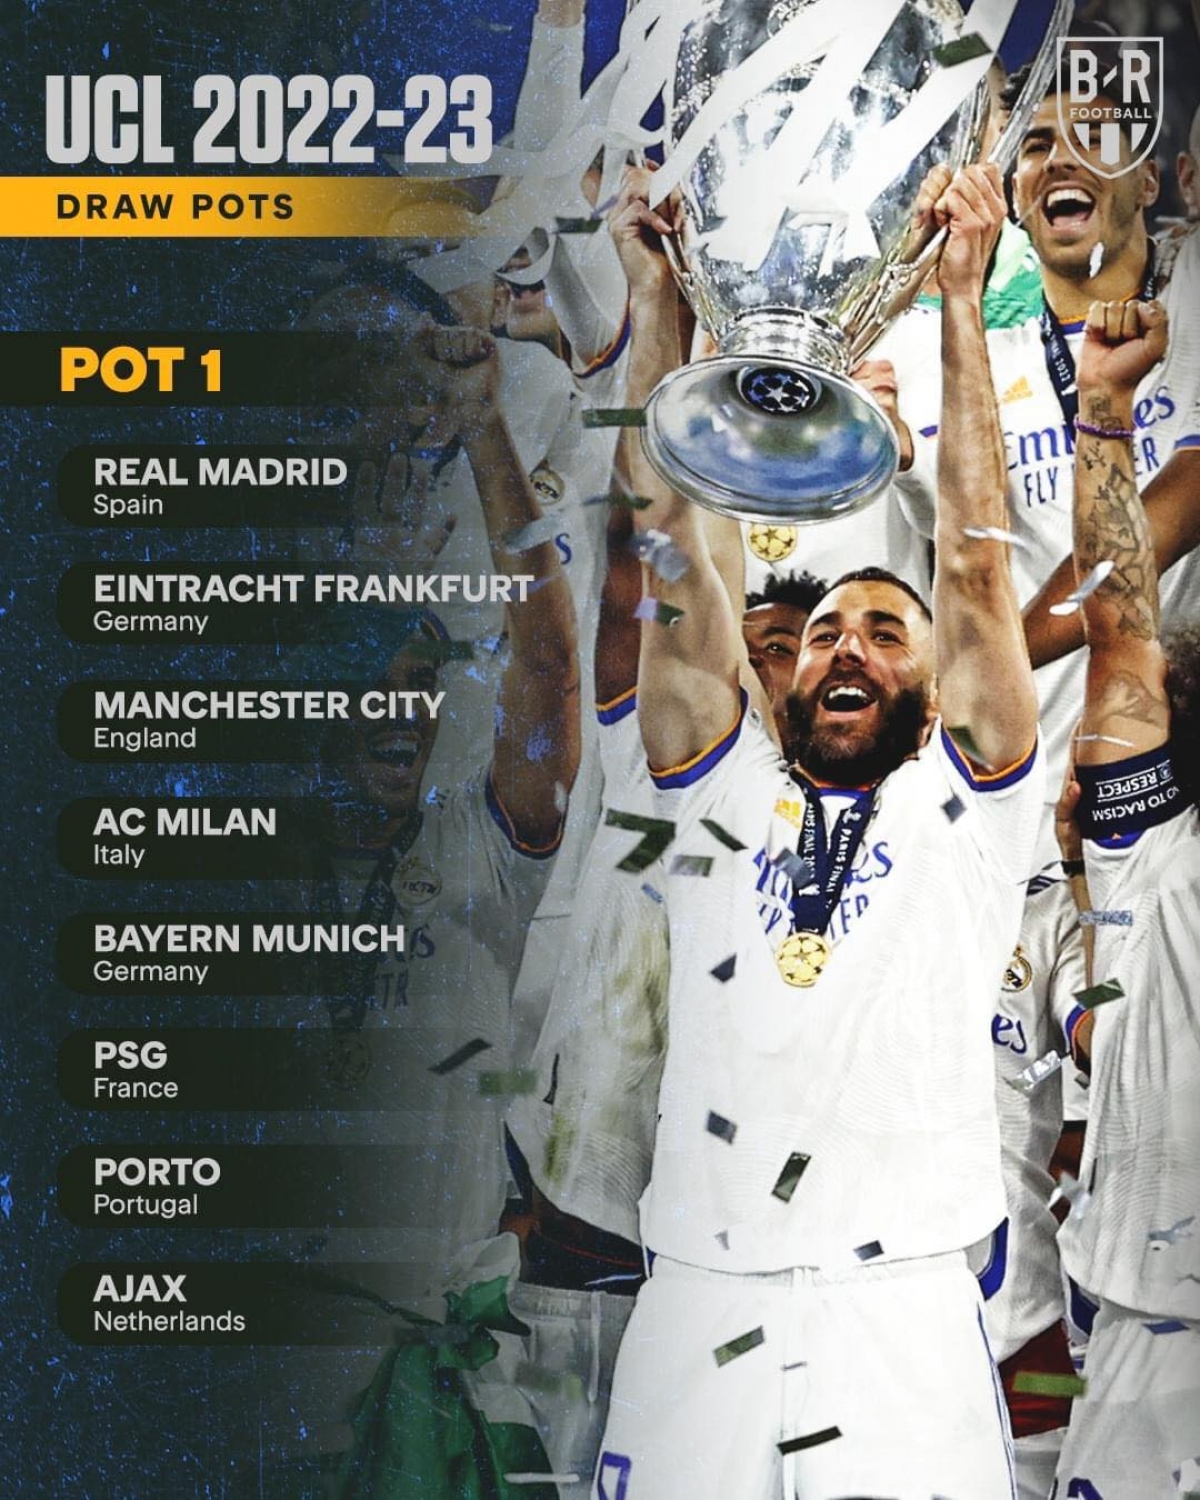 Nhóm 1: Real Madrid, Eintracht Frankfurt, Manchester City, AC Milan, Bayern Munich, Paris Saint Germain, Porto, Ajax